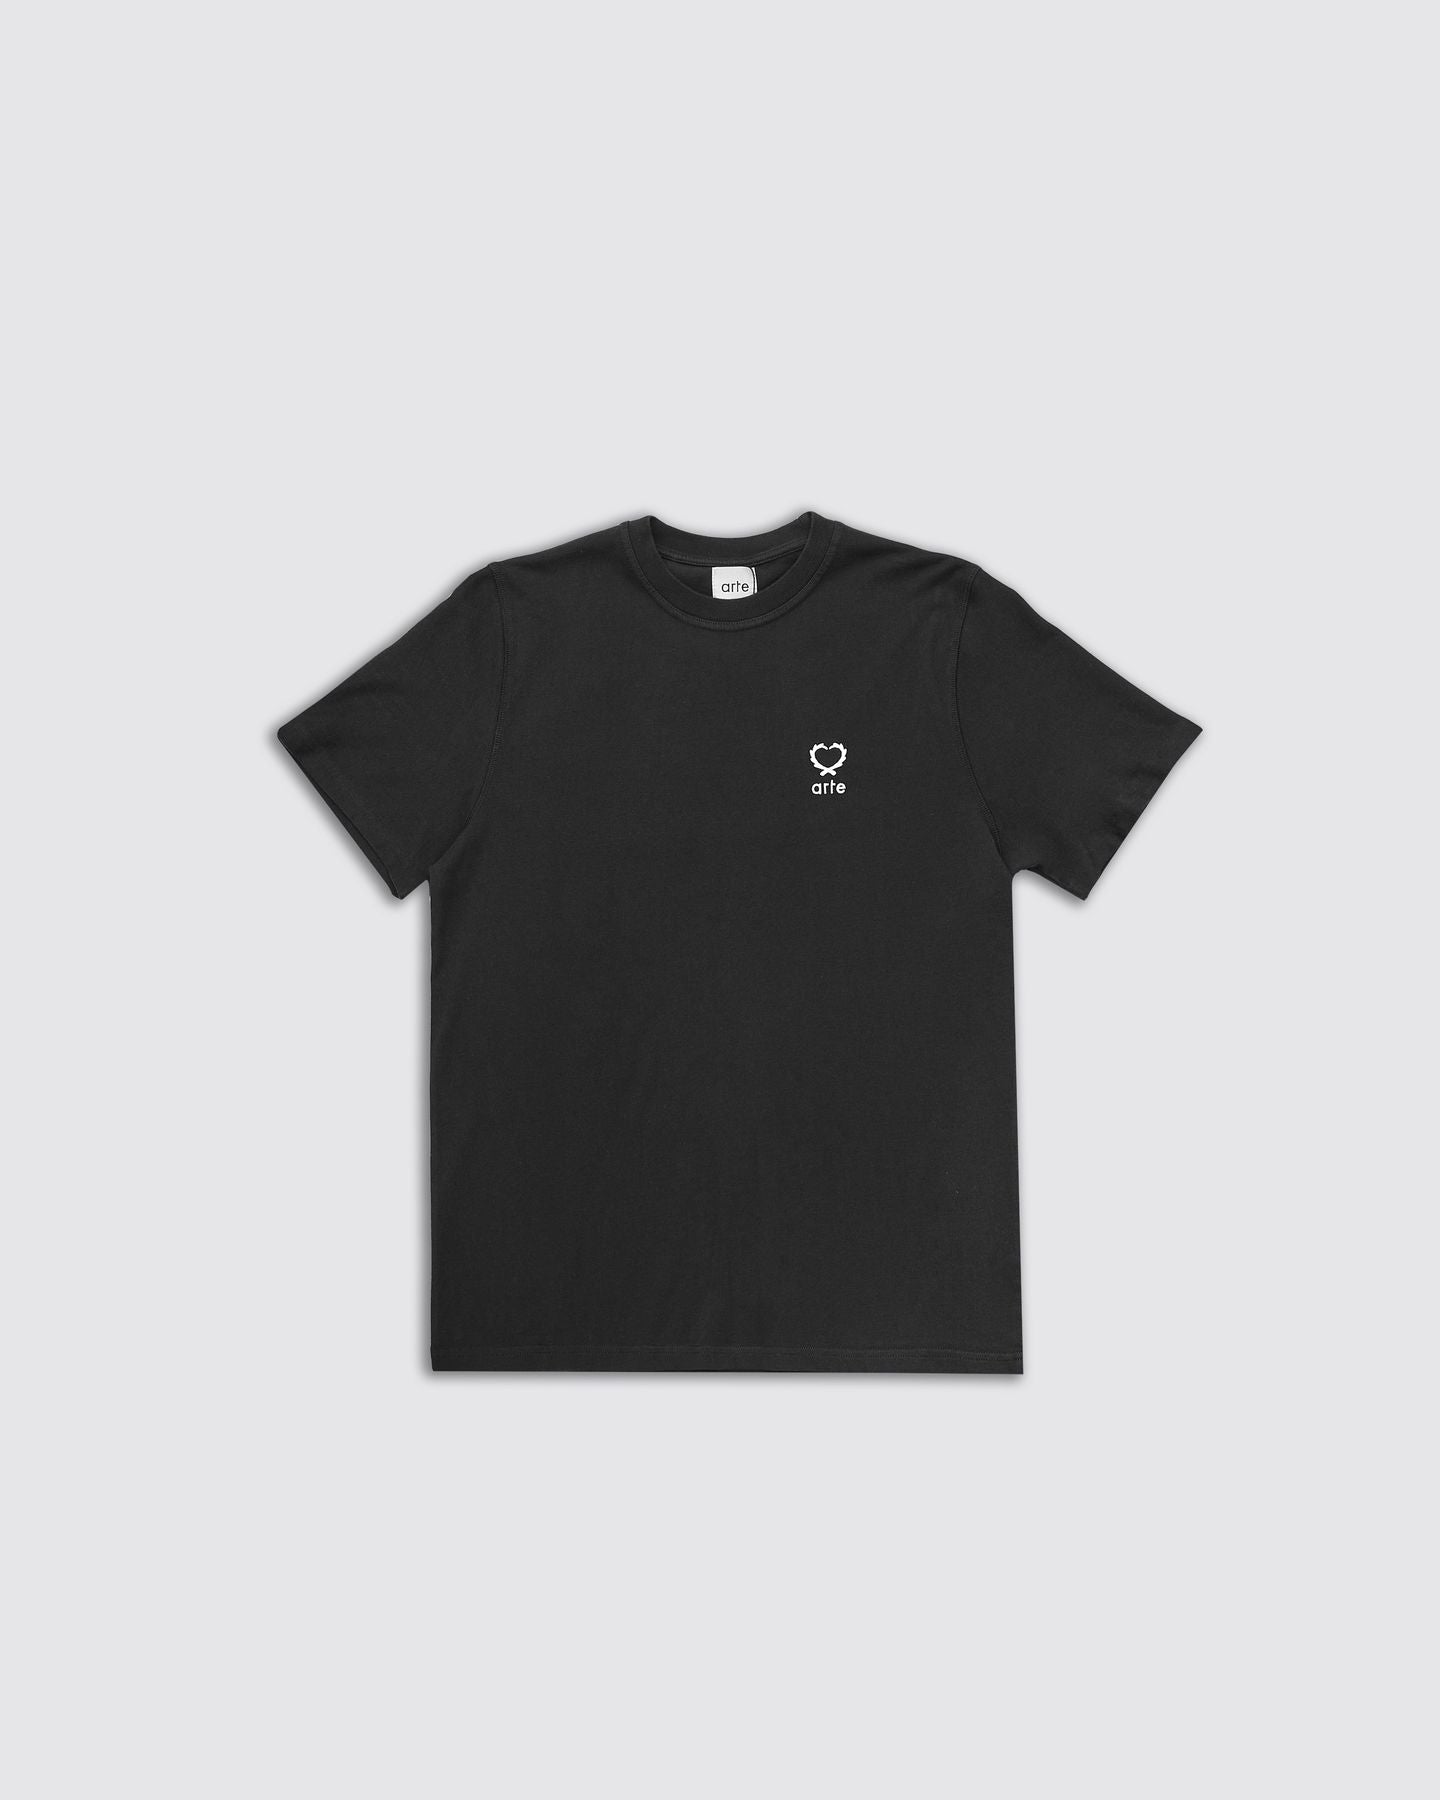 Teo Small Heart T-Shirt Black